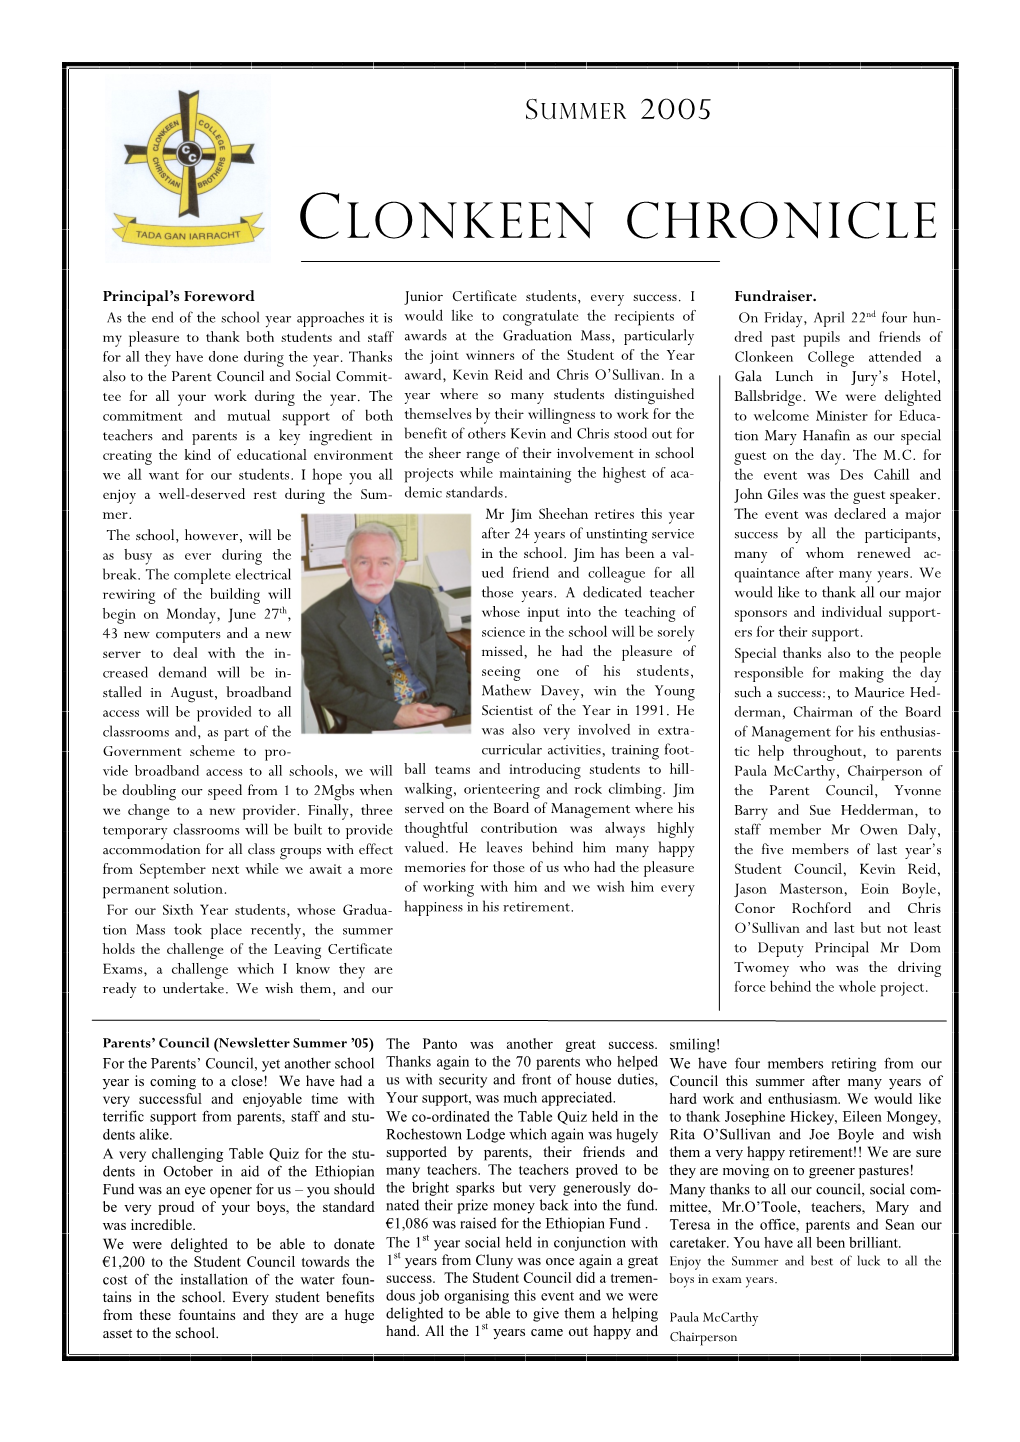 Clonkeen Chronicle